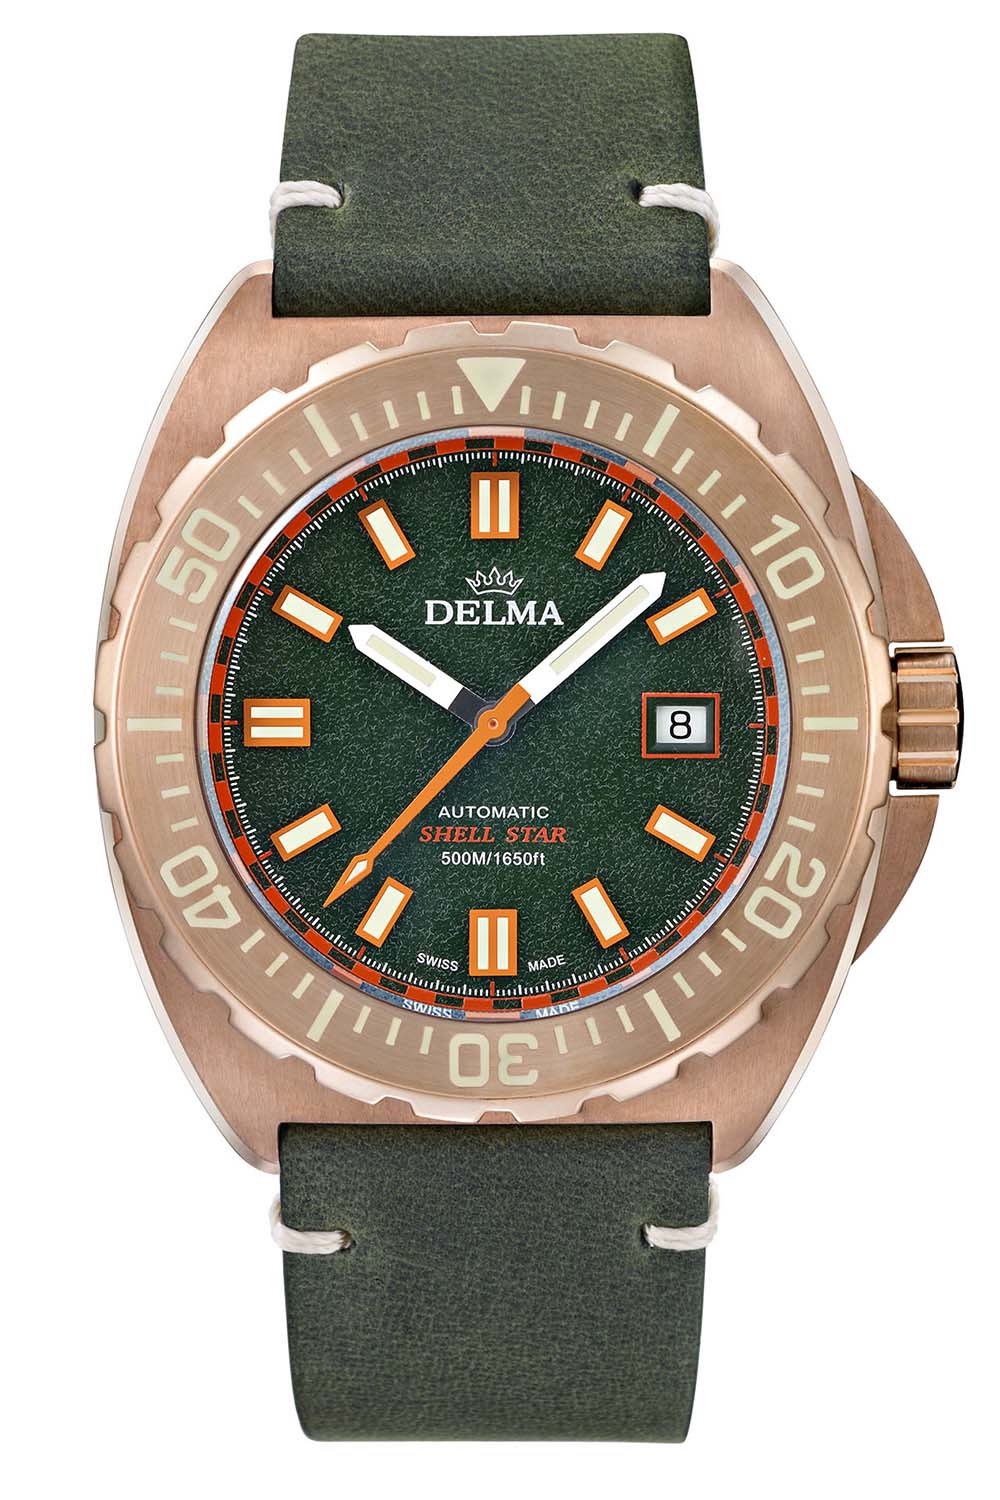 Delma Shell Star Bronze Limited Edition